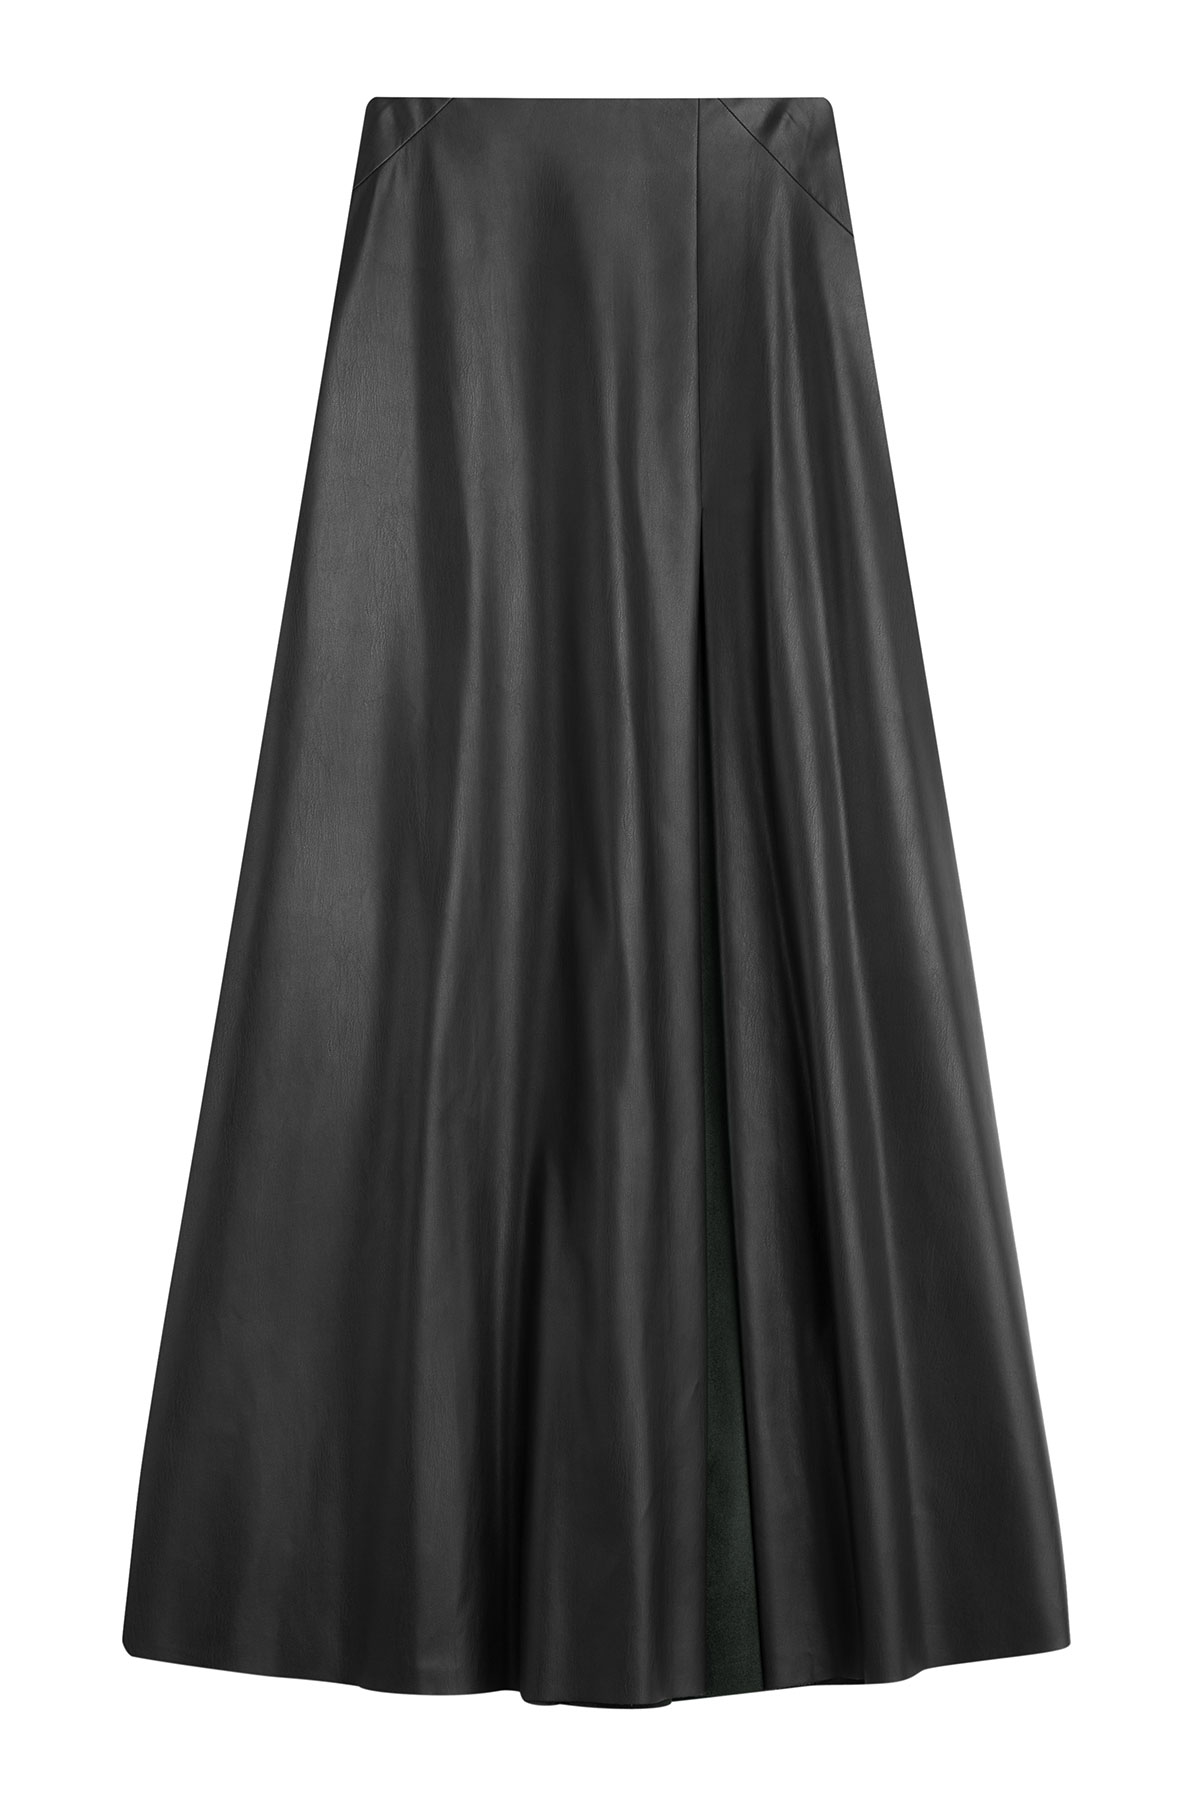 Lyst - Barbara Bui Faux Leather Maxi Skirt - Black in Black